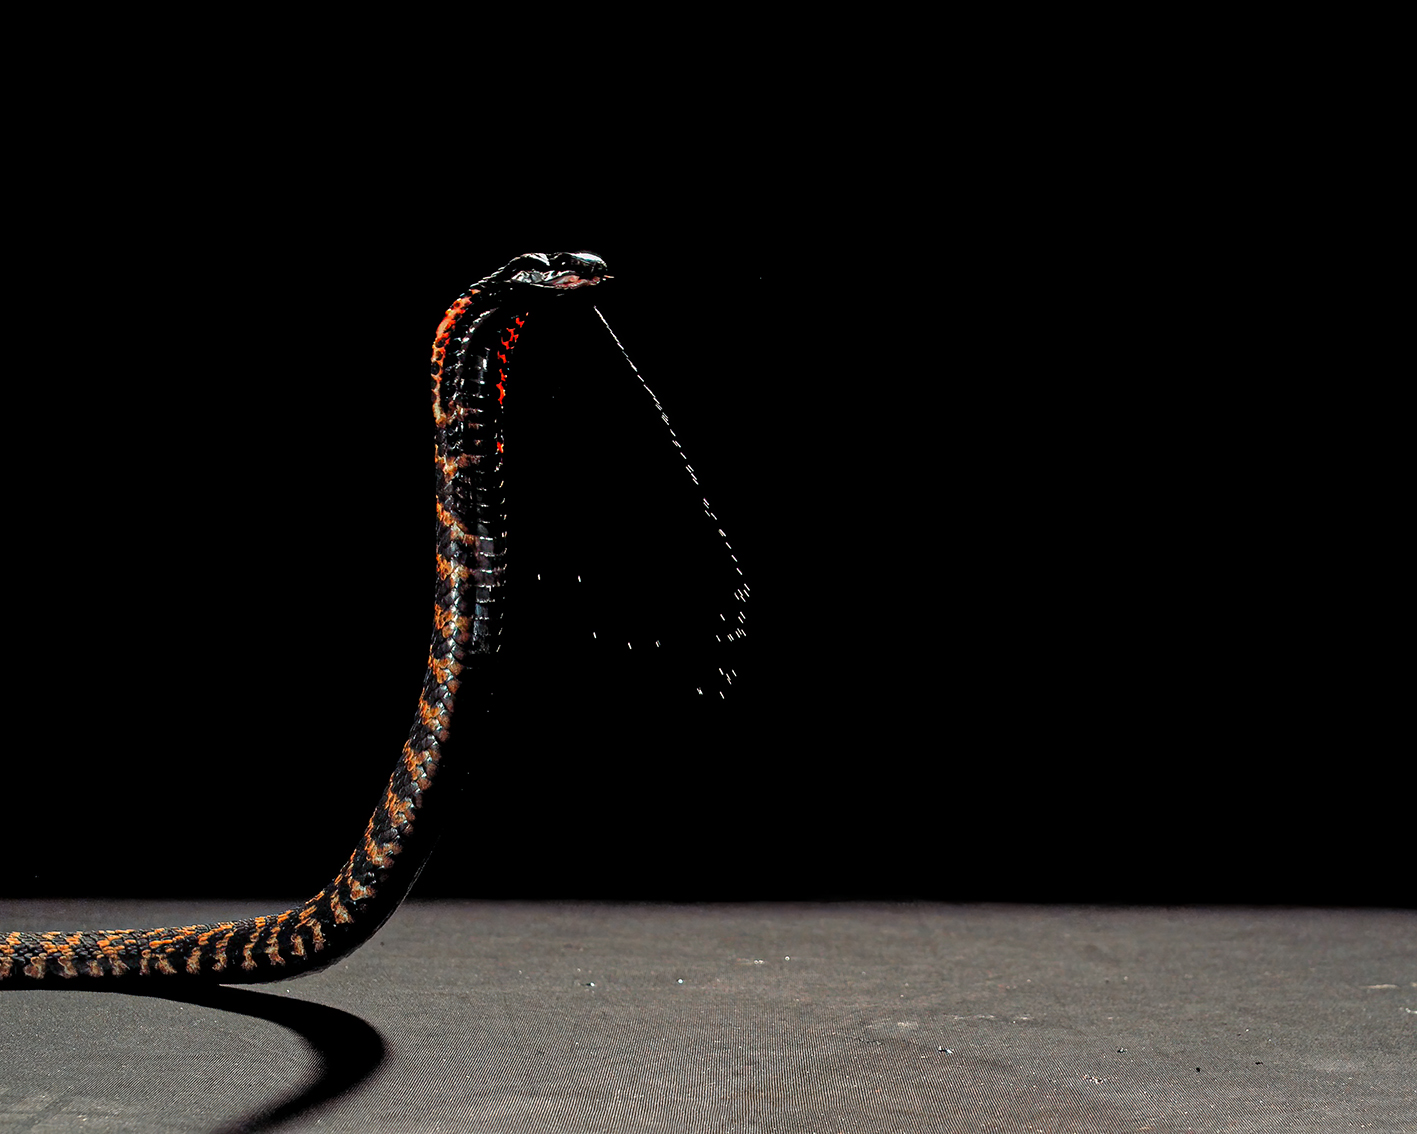 ©The Trustees of the Natural History Museum, London and Callum Mair Hemachatus haemachatus slow motion venom spitting